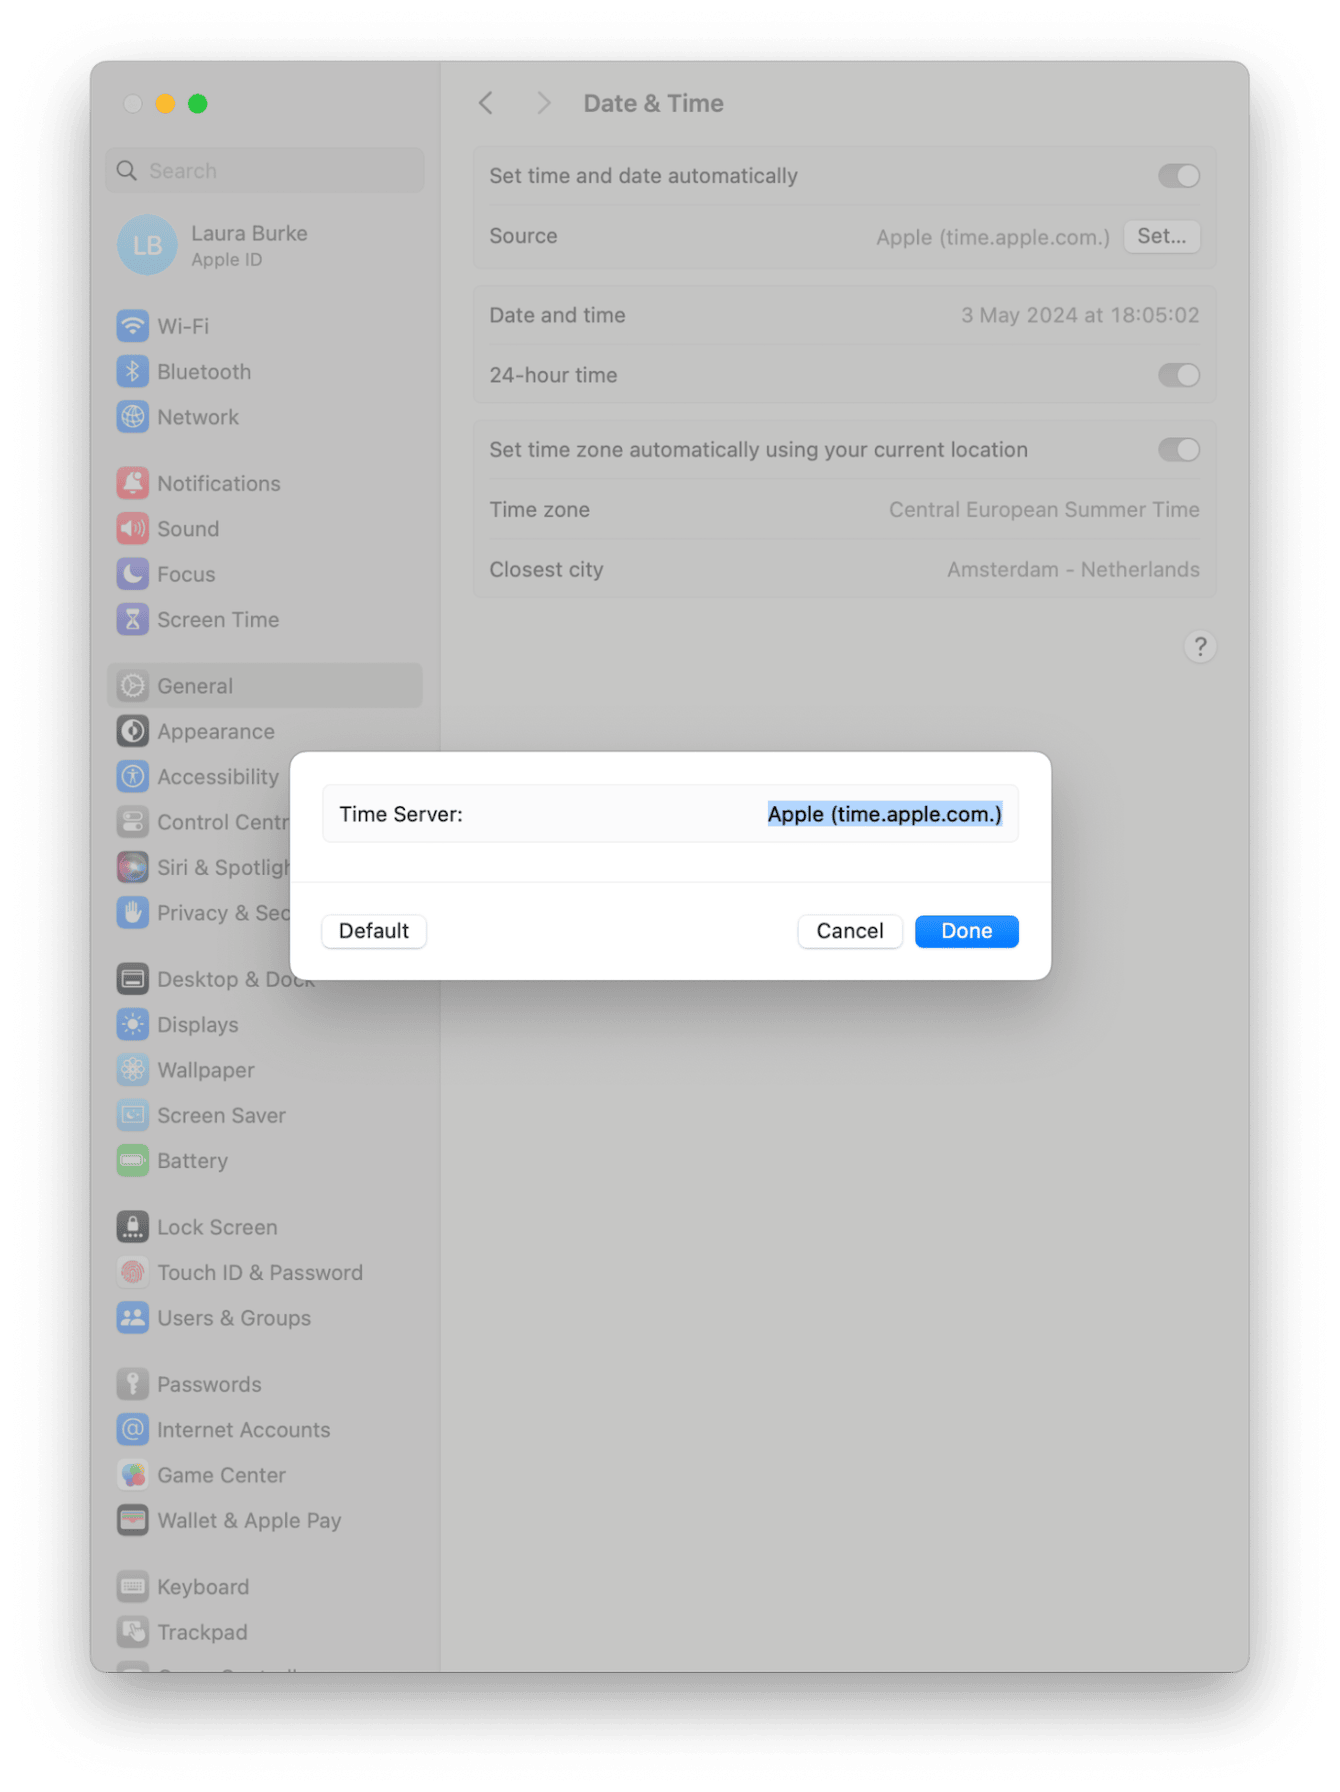 Date & Time settings on Mac